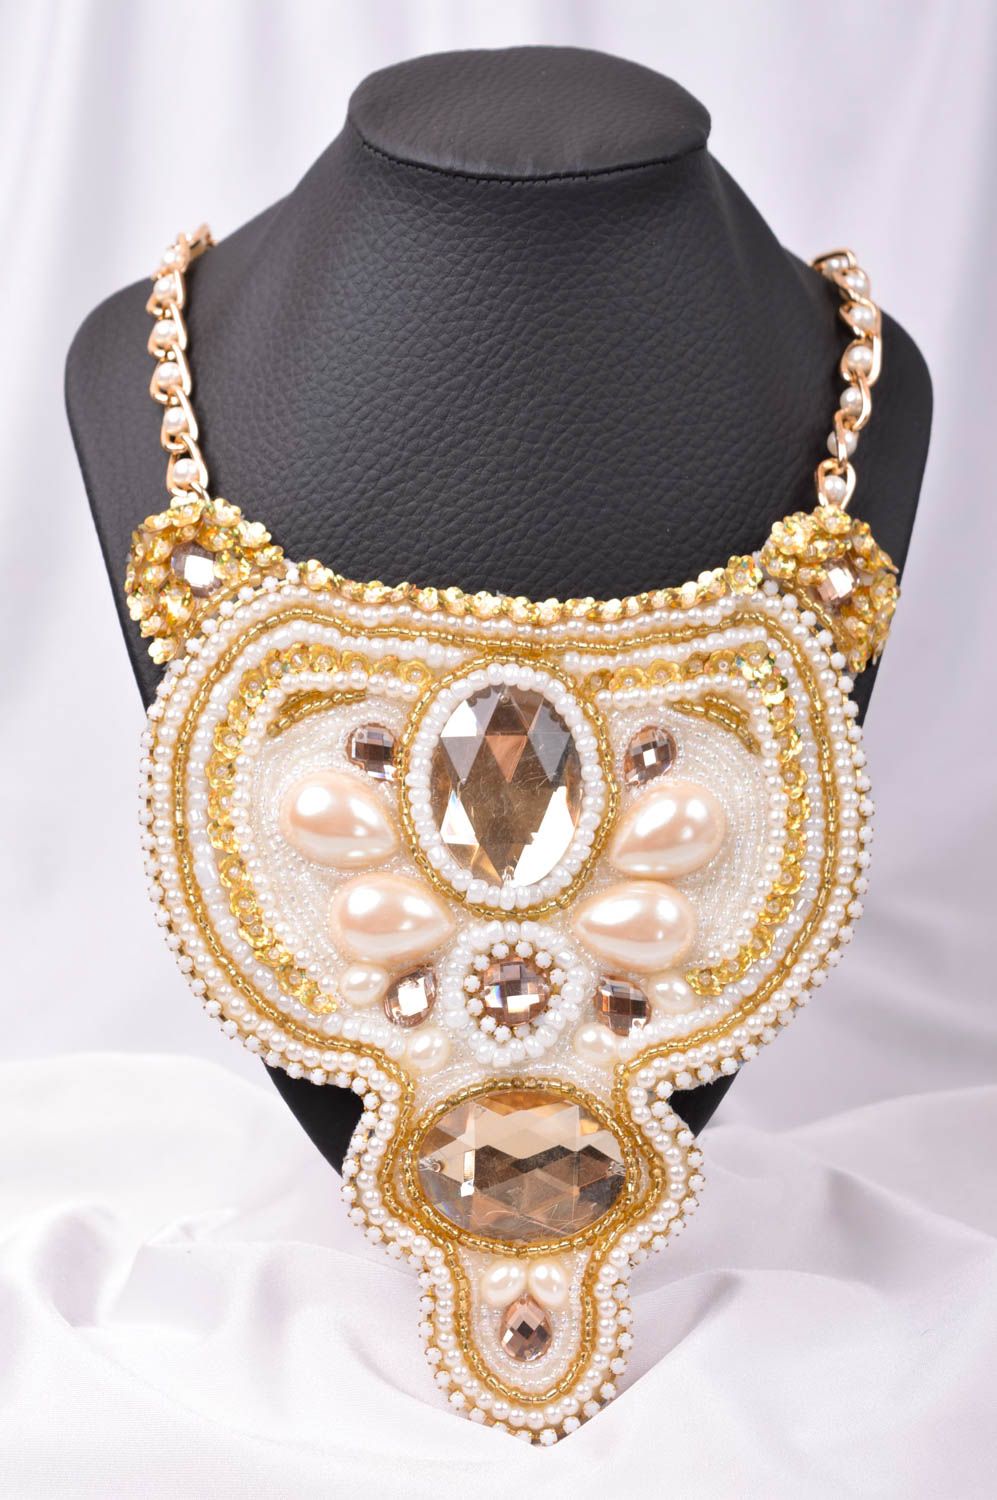 Handmade necklace designer accessory unusual gift beautiful beads jewelry photo 1